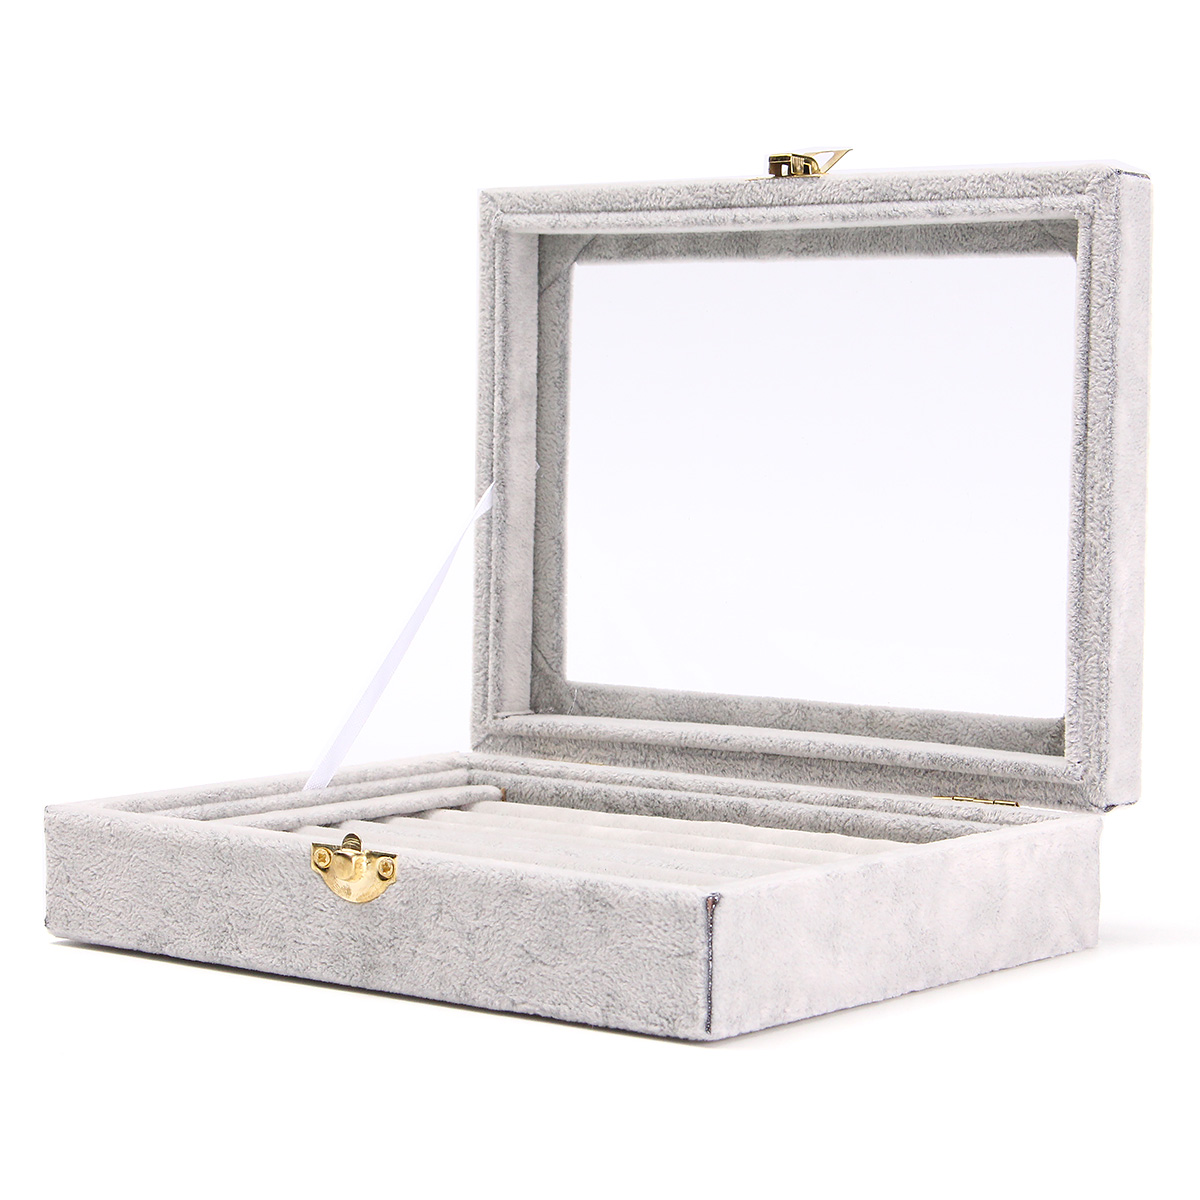 Jewelry-Velvet-Wood-Ring-Display-Organizer-Case-Tray-Holder-Earring-Storage-Box-1221119